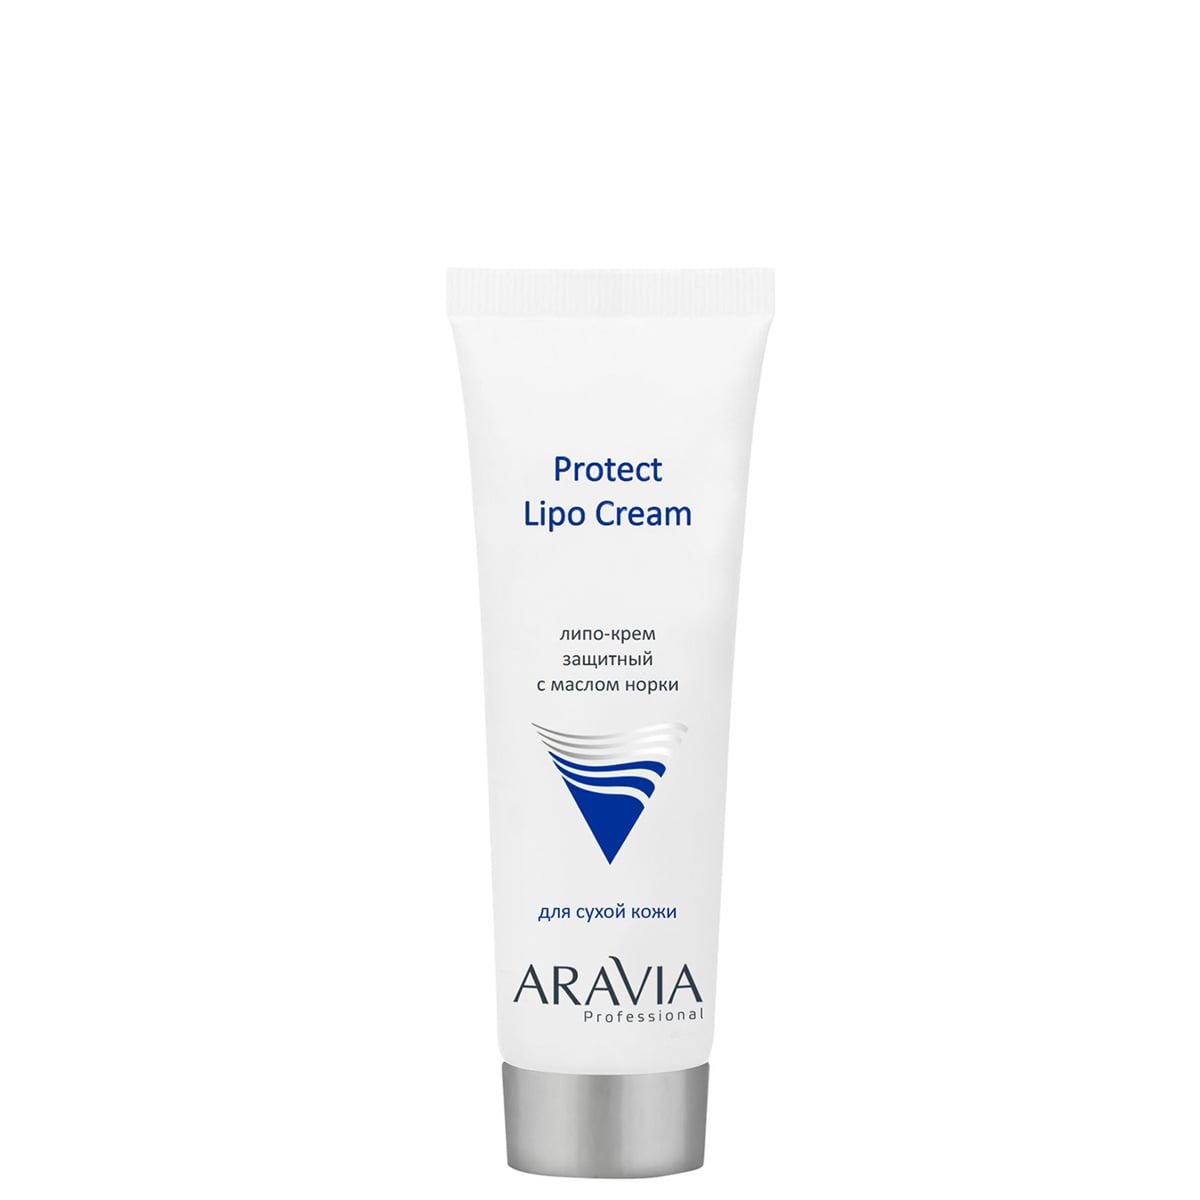 Липо-крем защитный с маслом норки Protect Lipo Cream, 50 мл, ARAVIA Professional. 9204